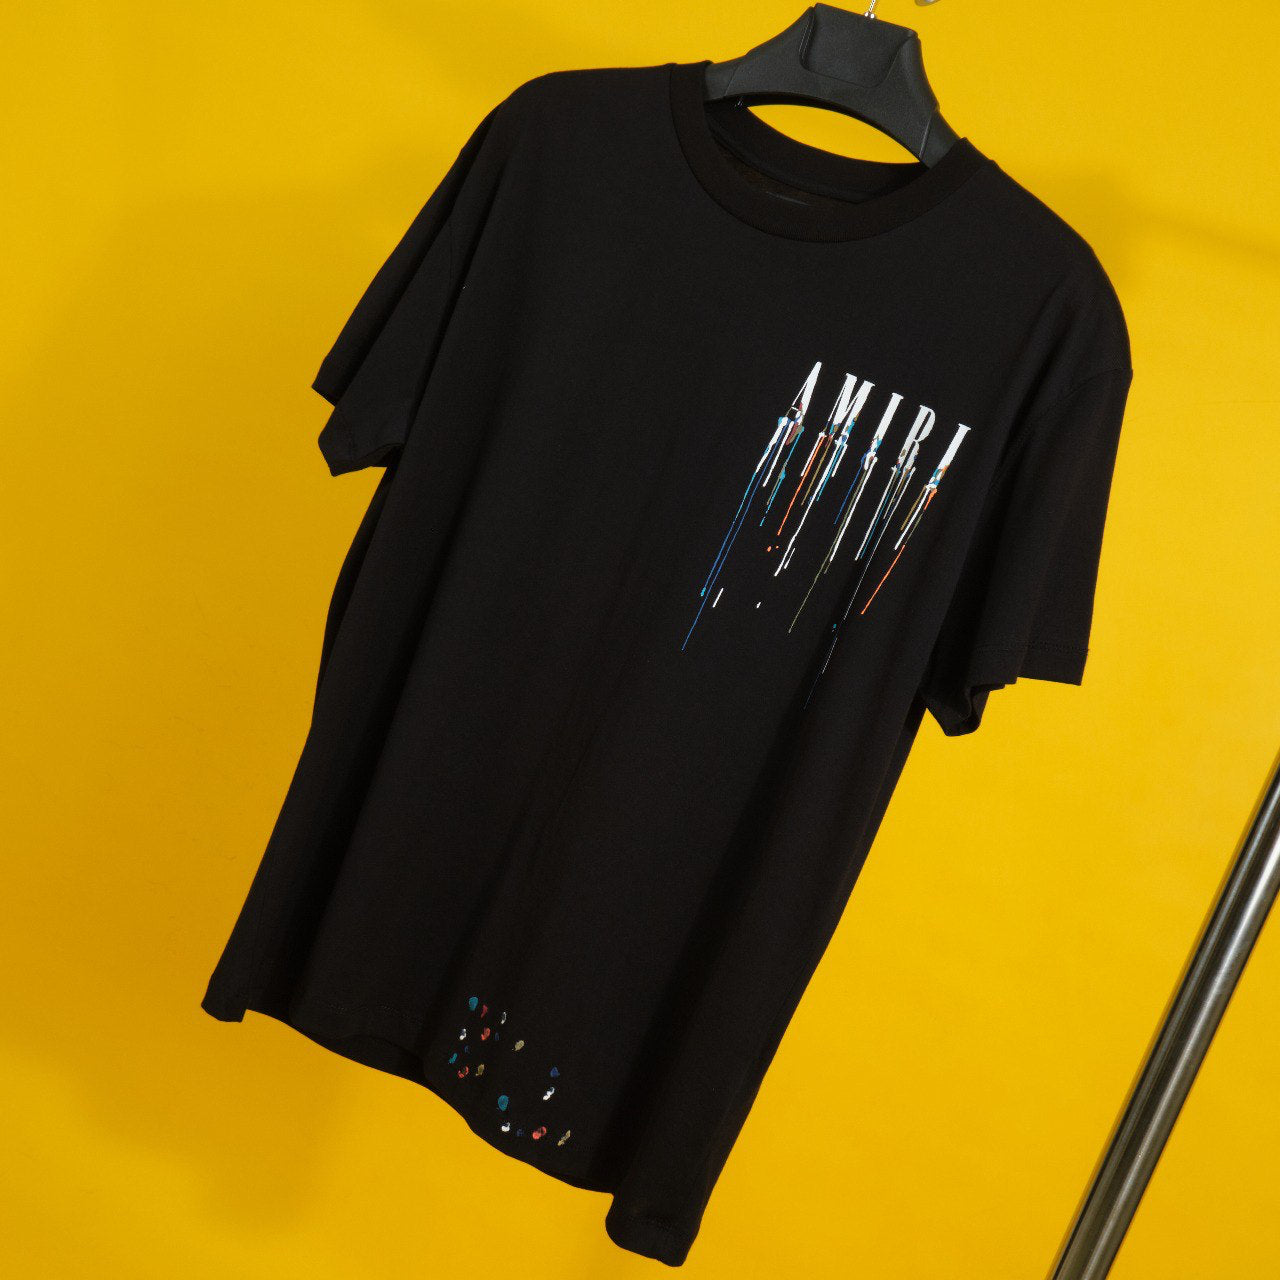 Amiri Paint Drip logo T-shirt Black